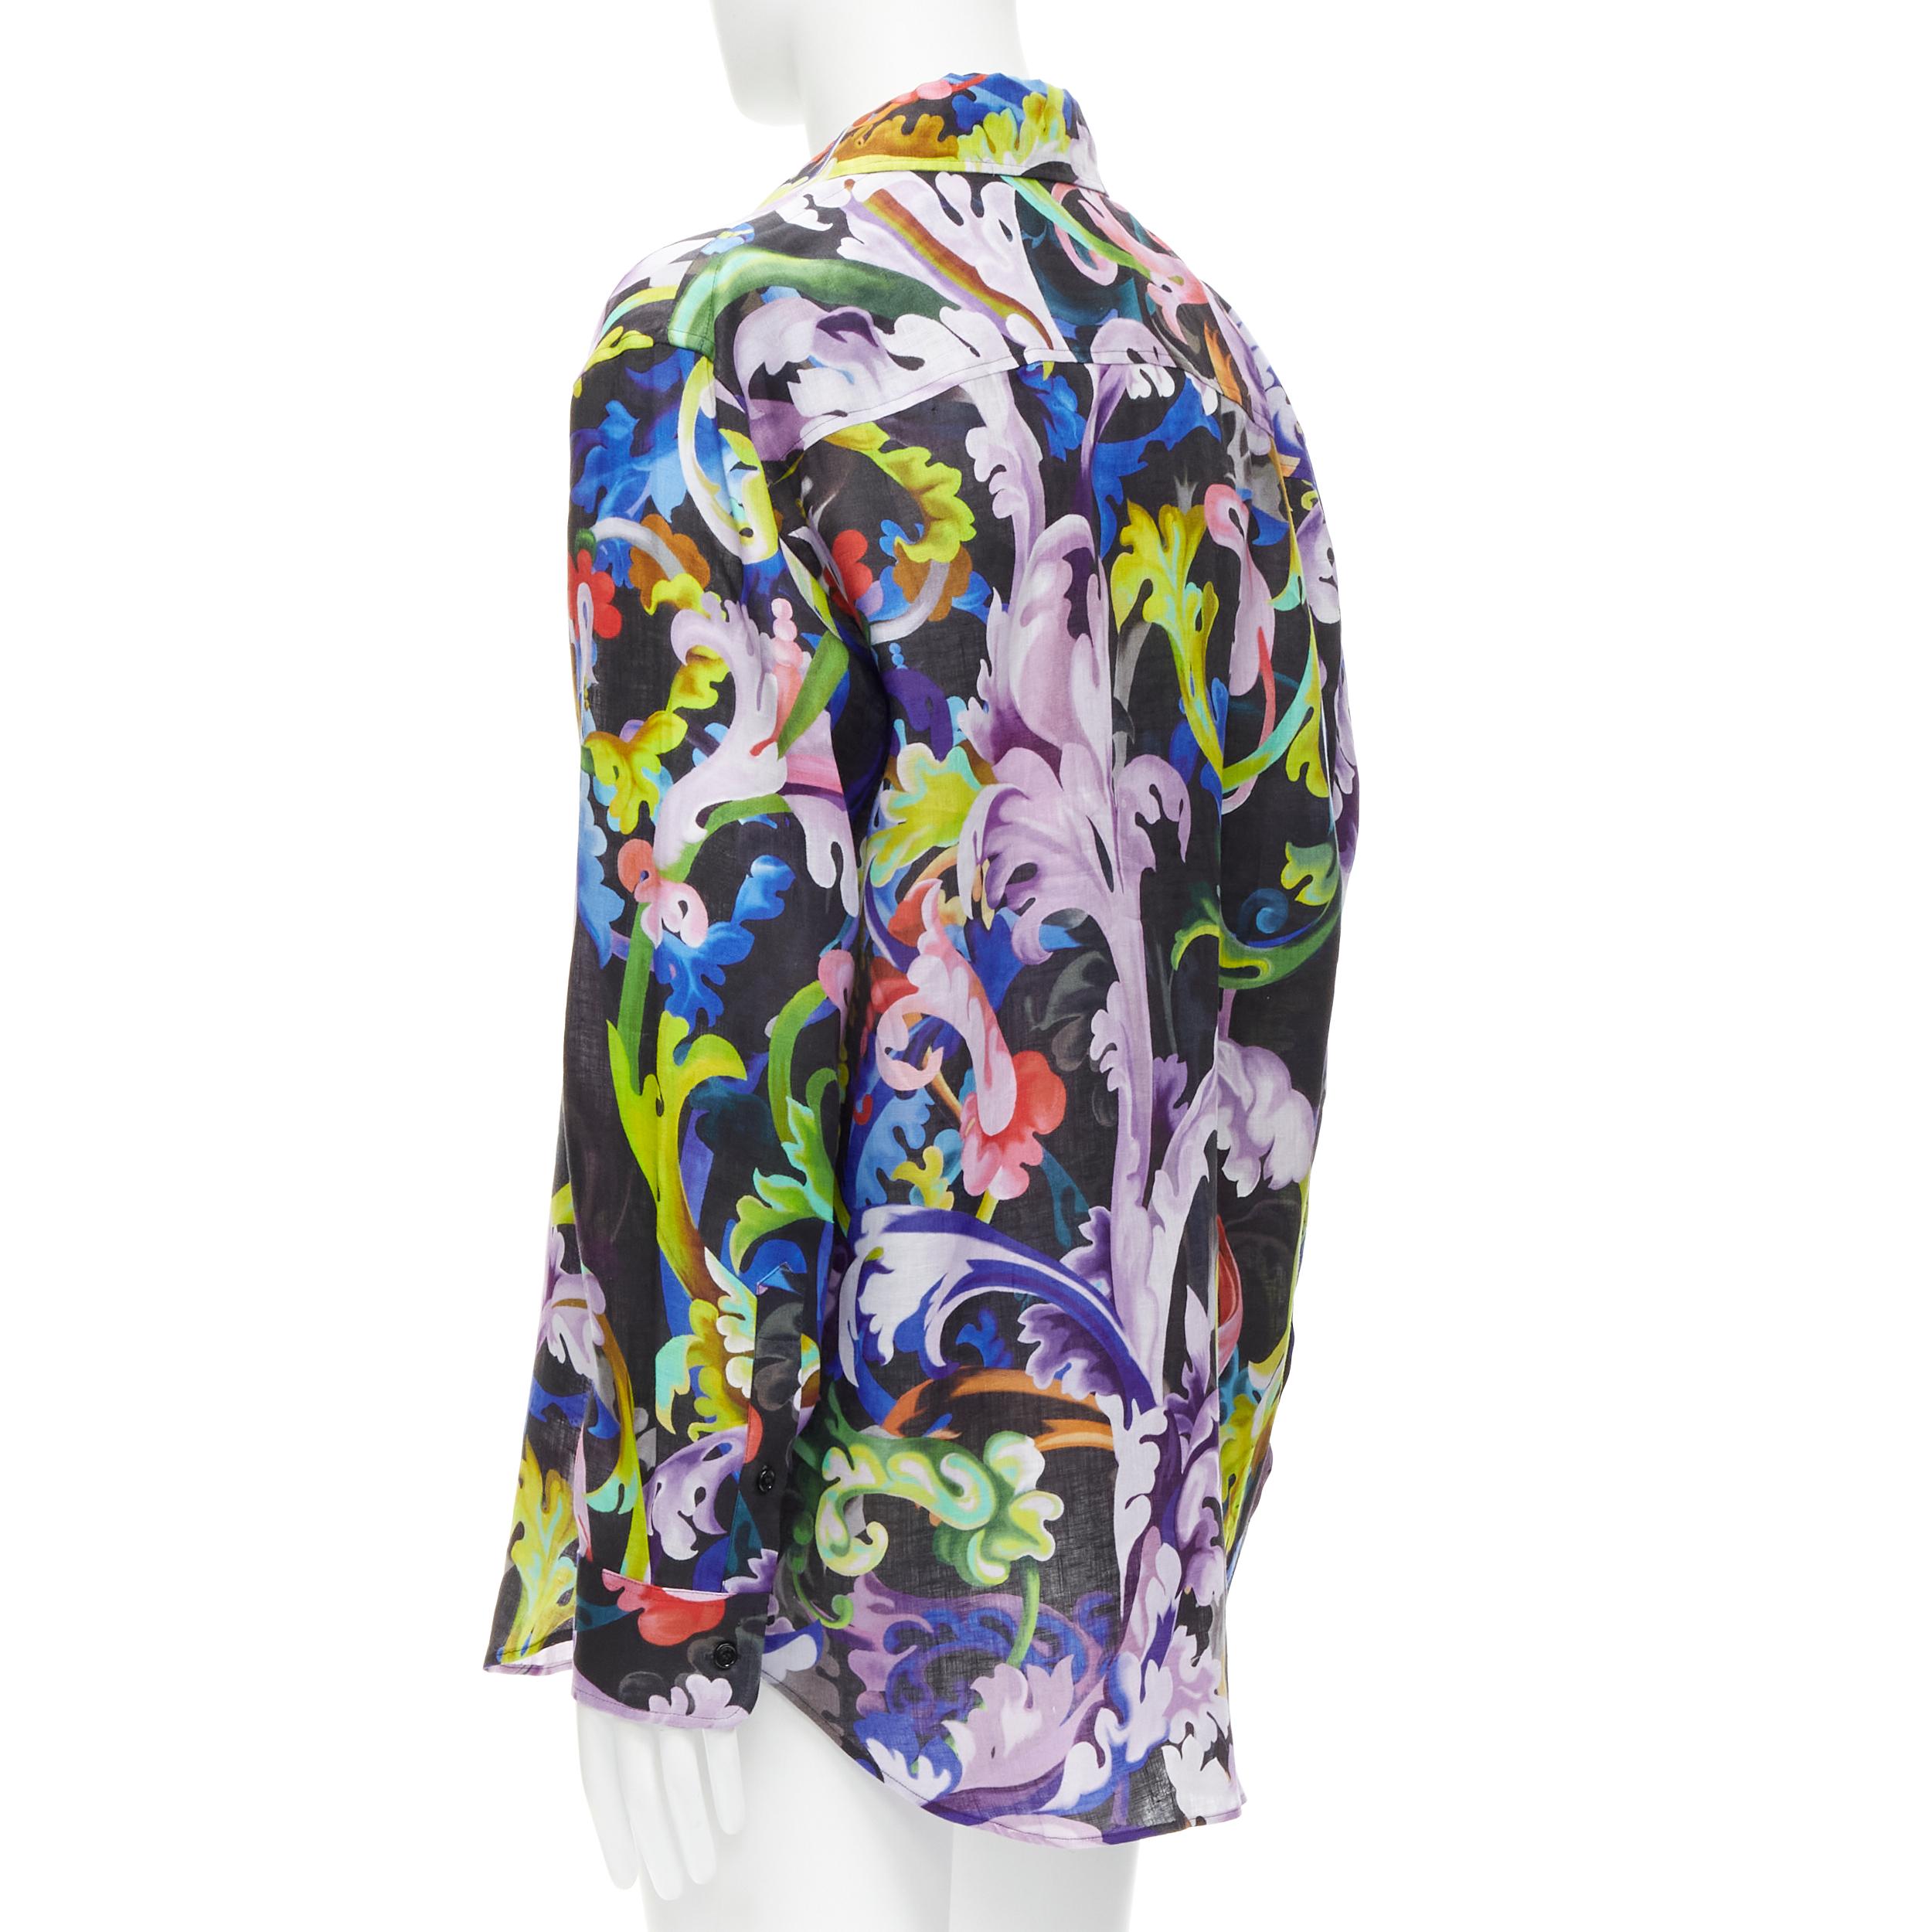 Men's new VERSACE 2021 Runway Baroccoflage colorful baroque floral linen shirt EU39 M For Sale